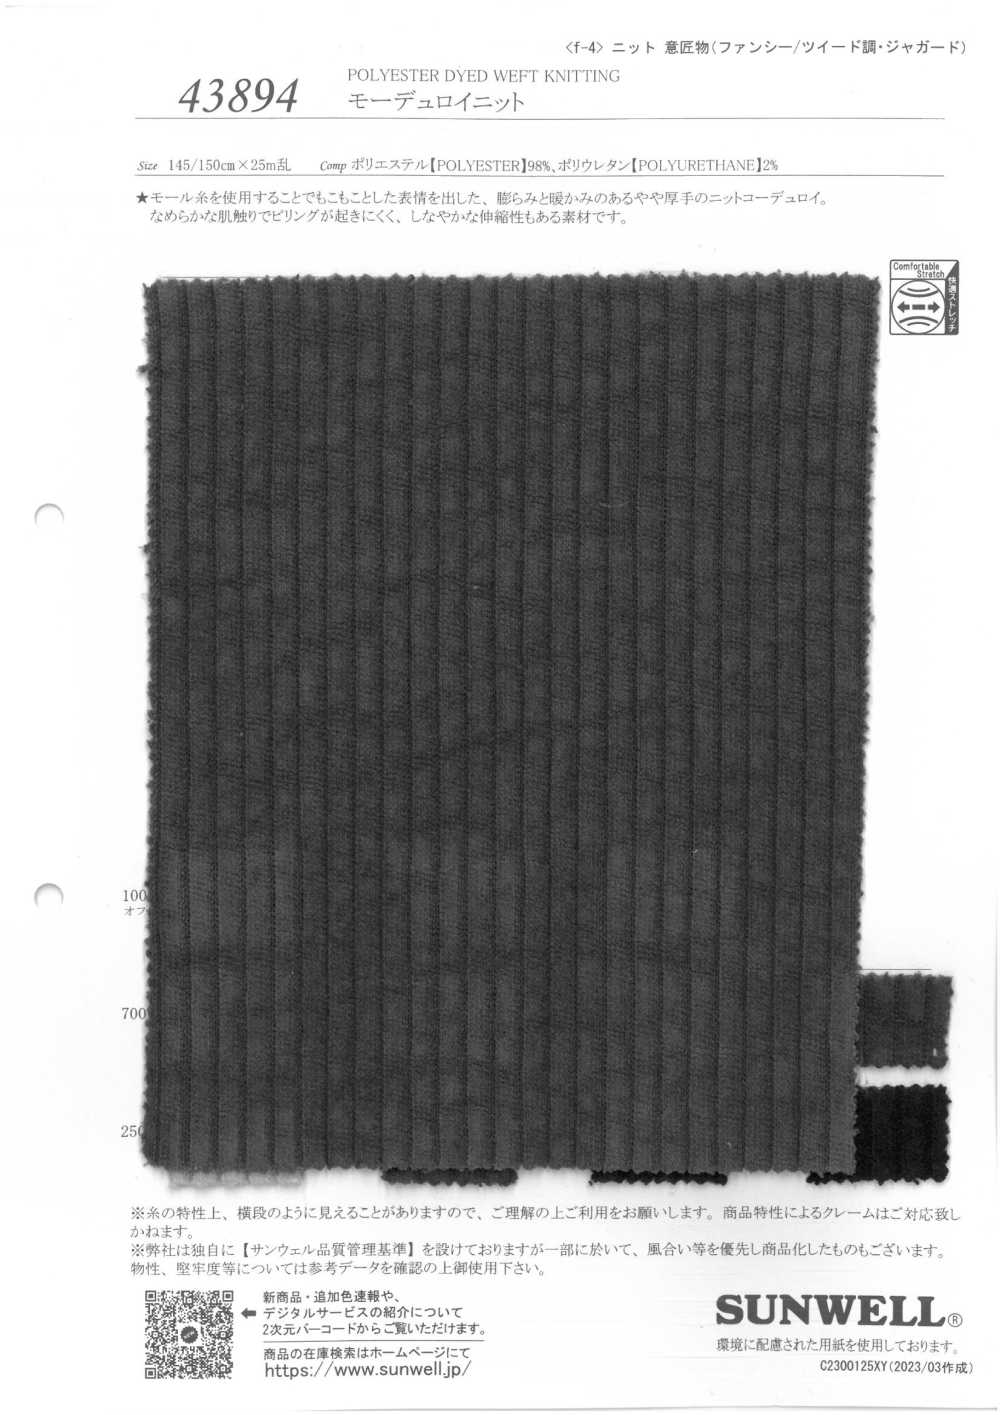 43894 Moduroy-Strick[Textilgewebe] SUNWELL